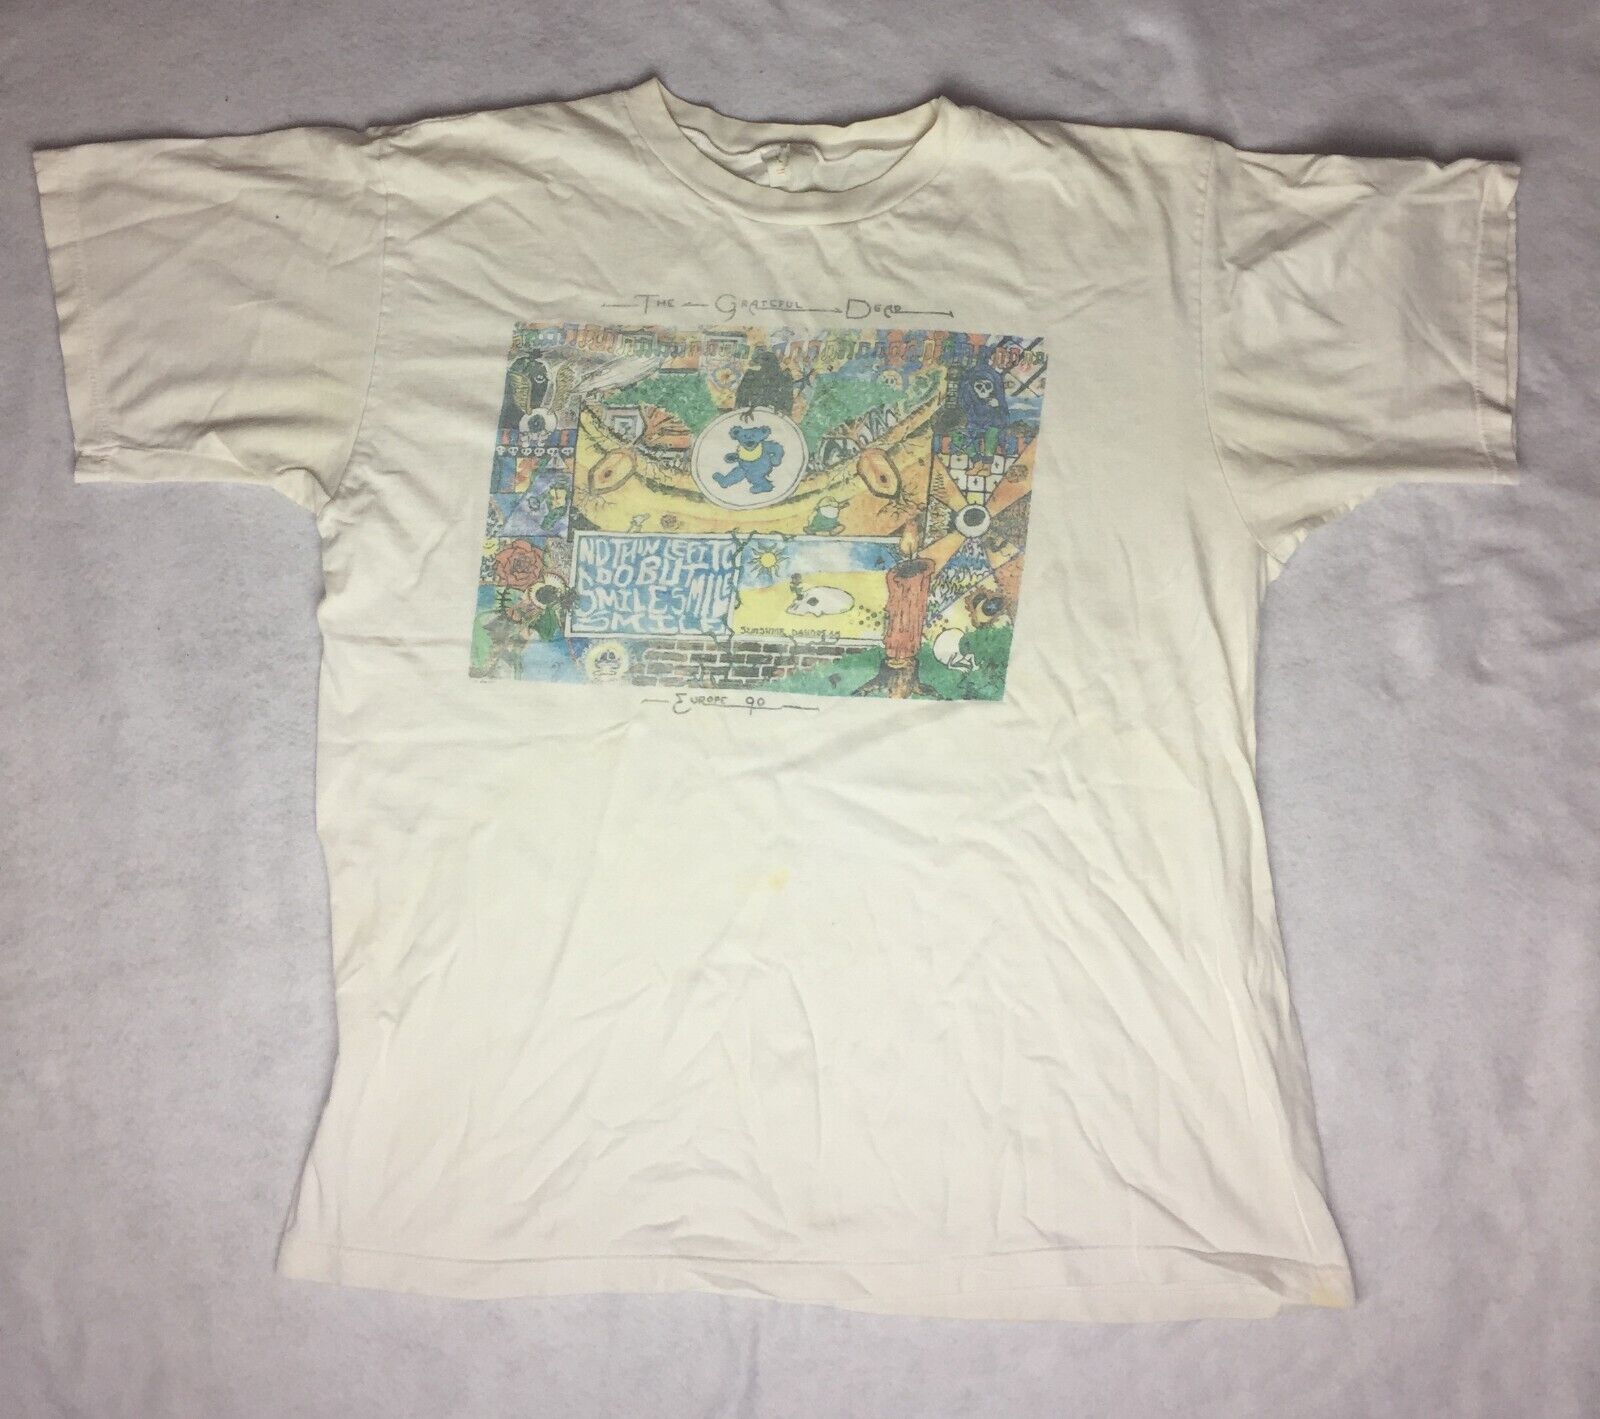 Vintage 1990 Grateful Dead Tour Shirt Extremely Rare Europe Tour - Size Medium